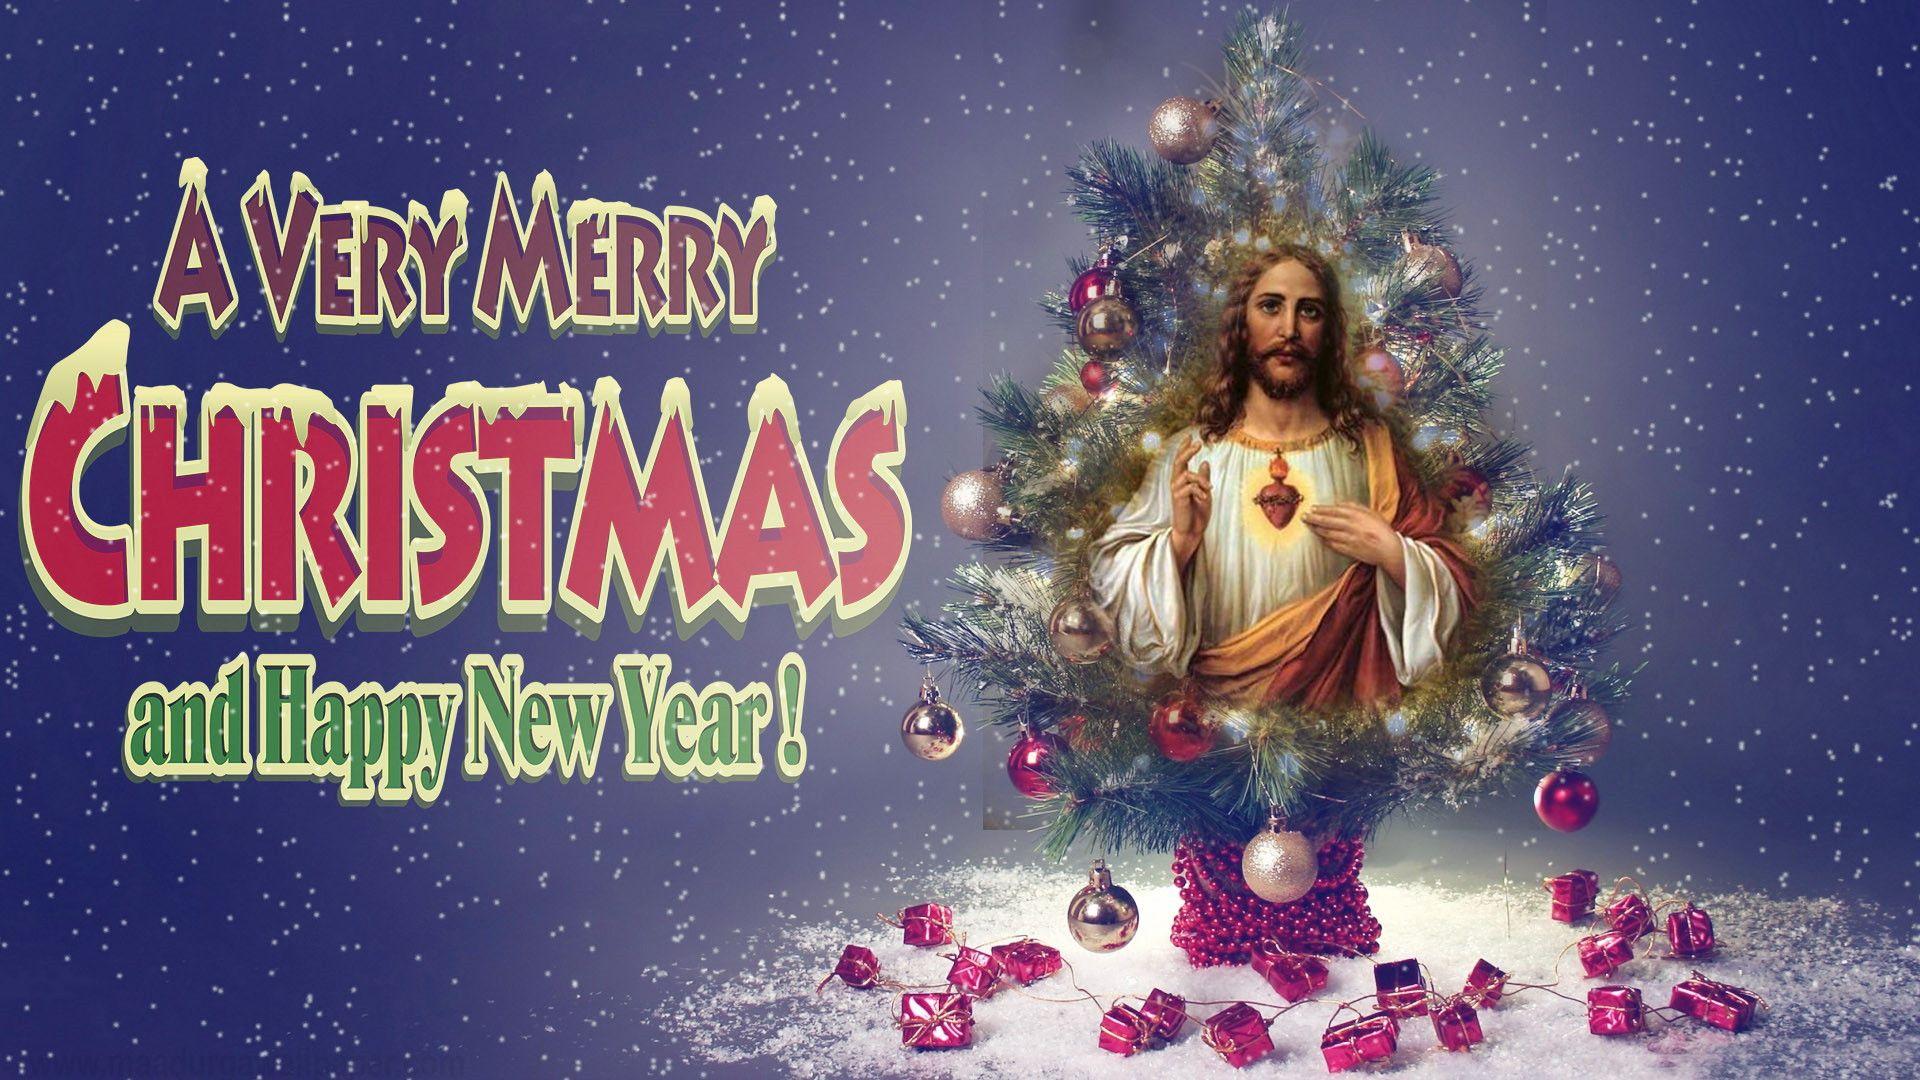 Baby Jesus Christmas wallpaper & HD photo download